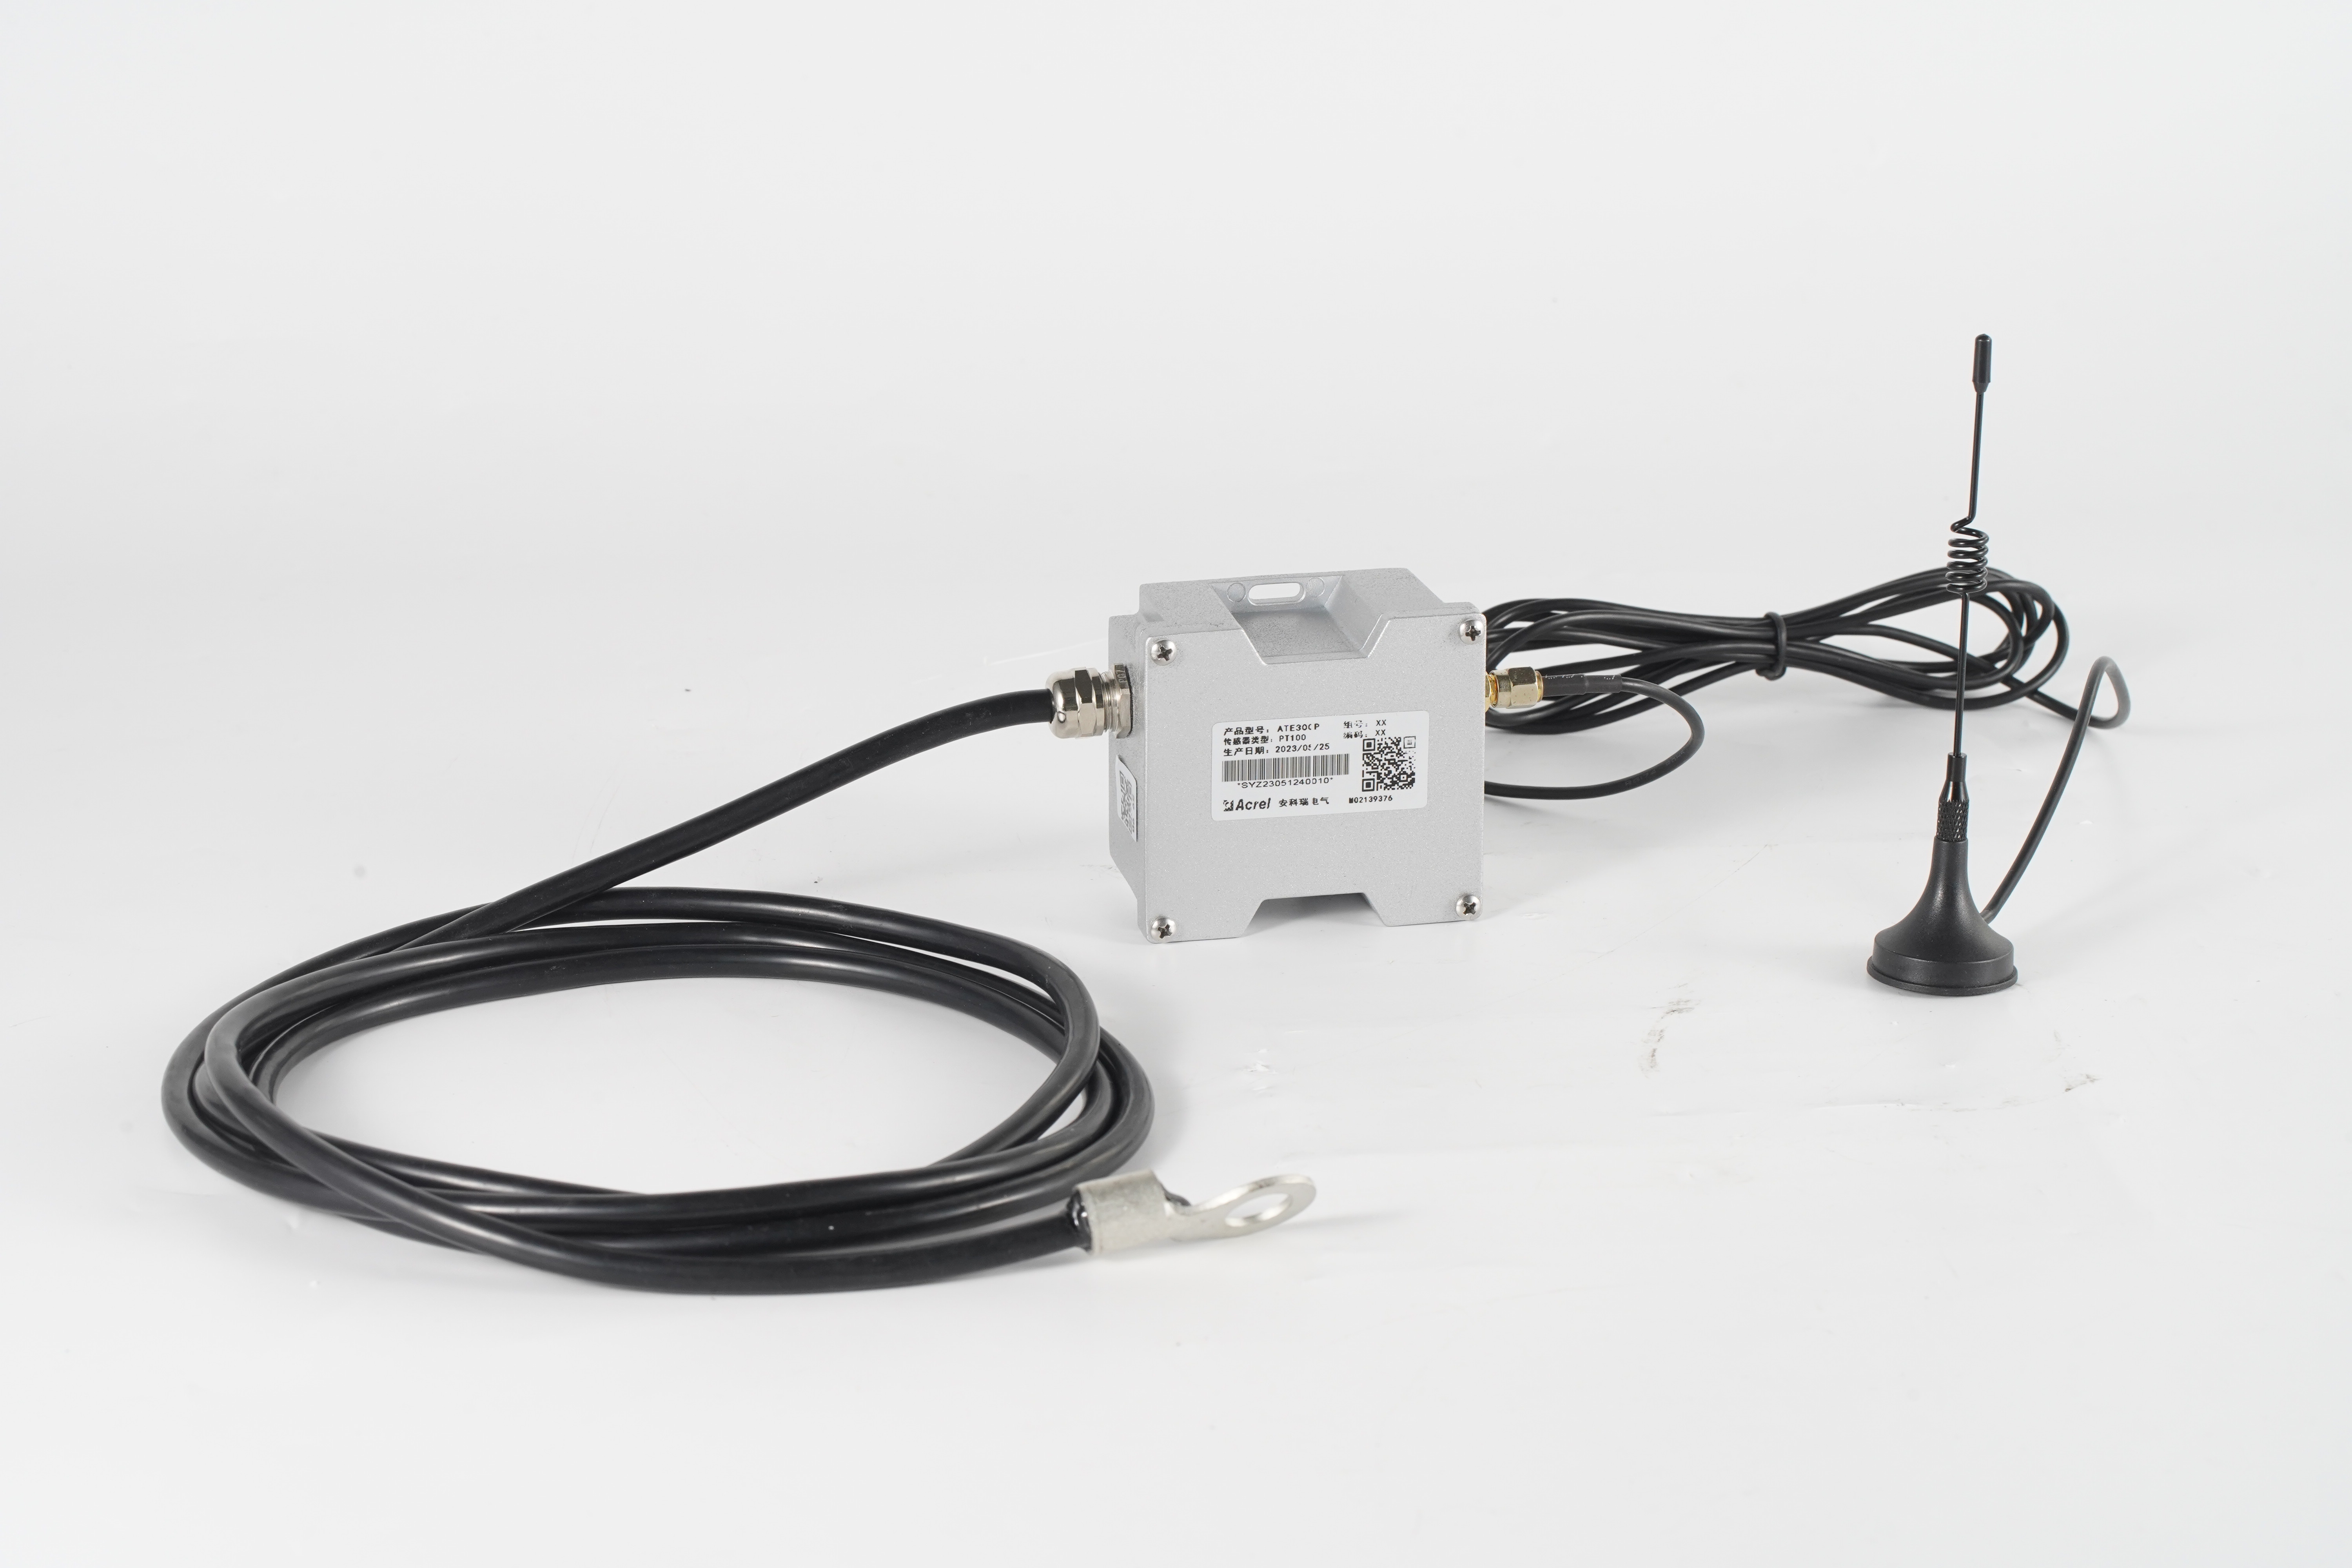 Acrel ATE300P Wireless Temperature Monitoring Sensor for Outdoor Temperature Monitoring Featured Image